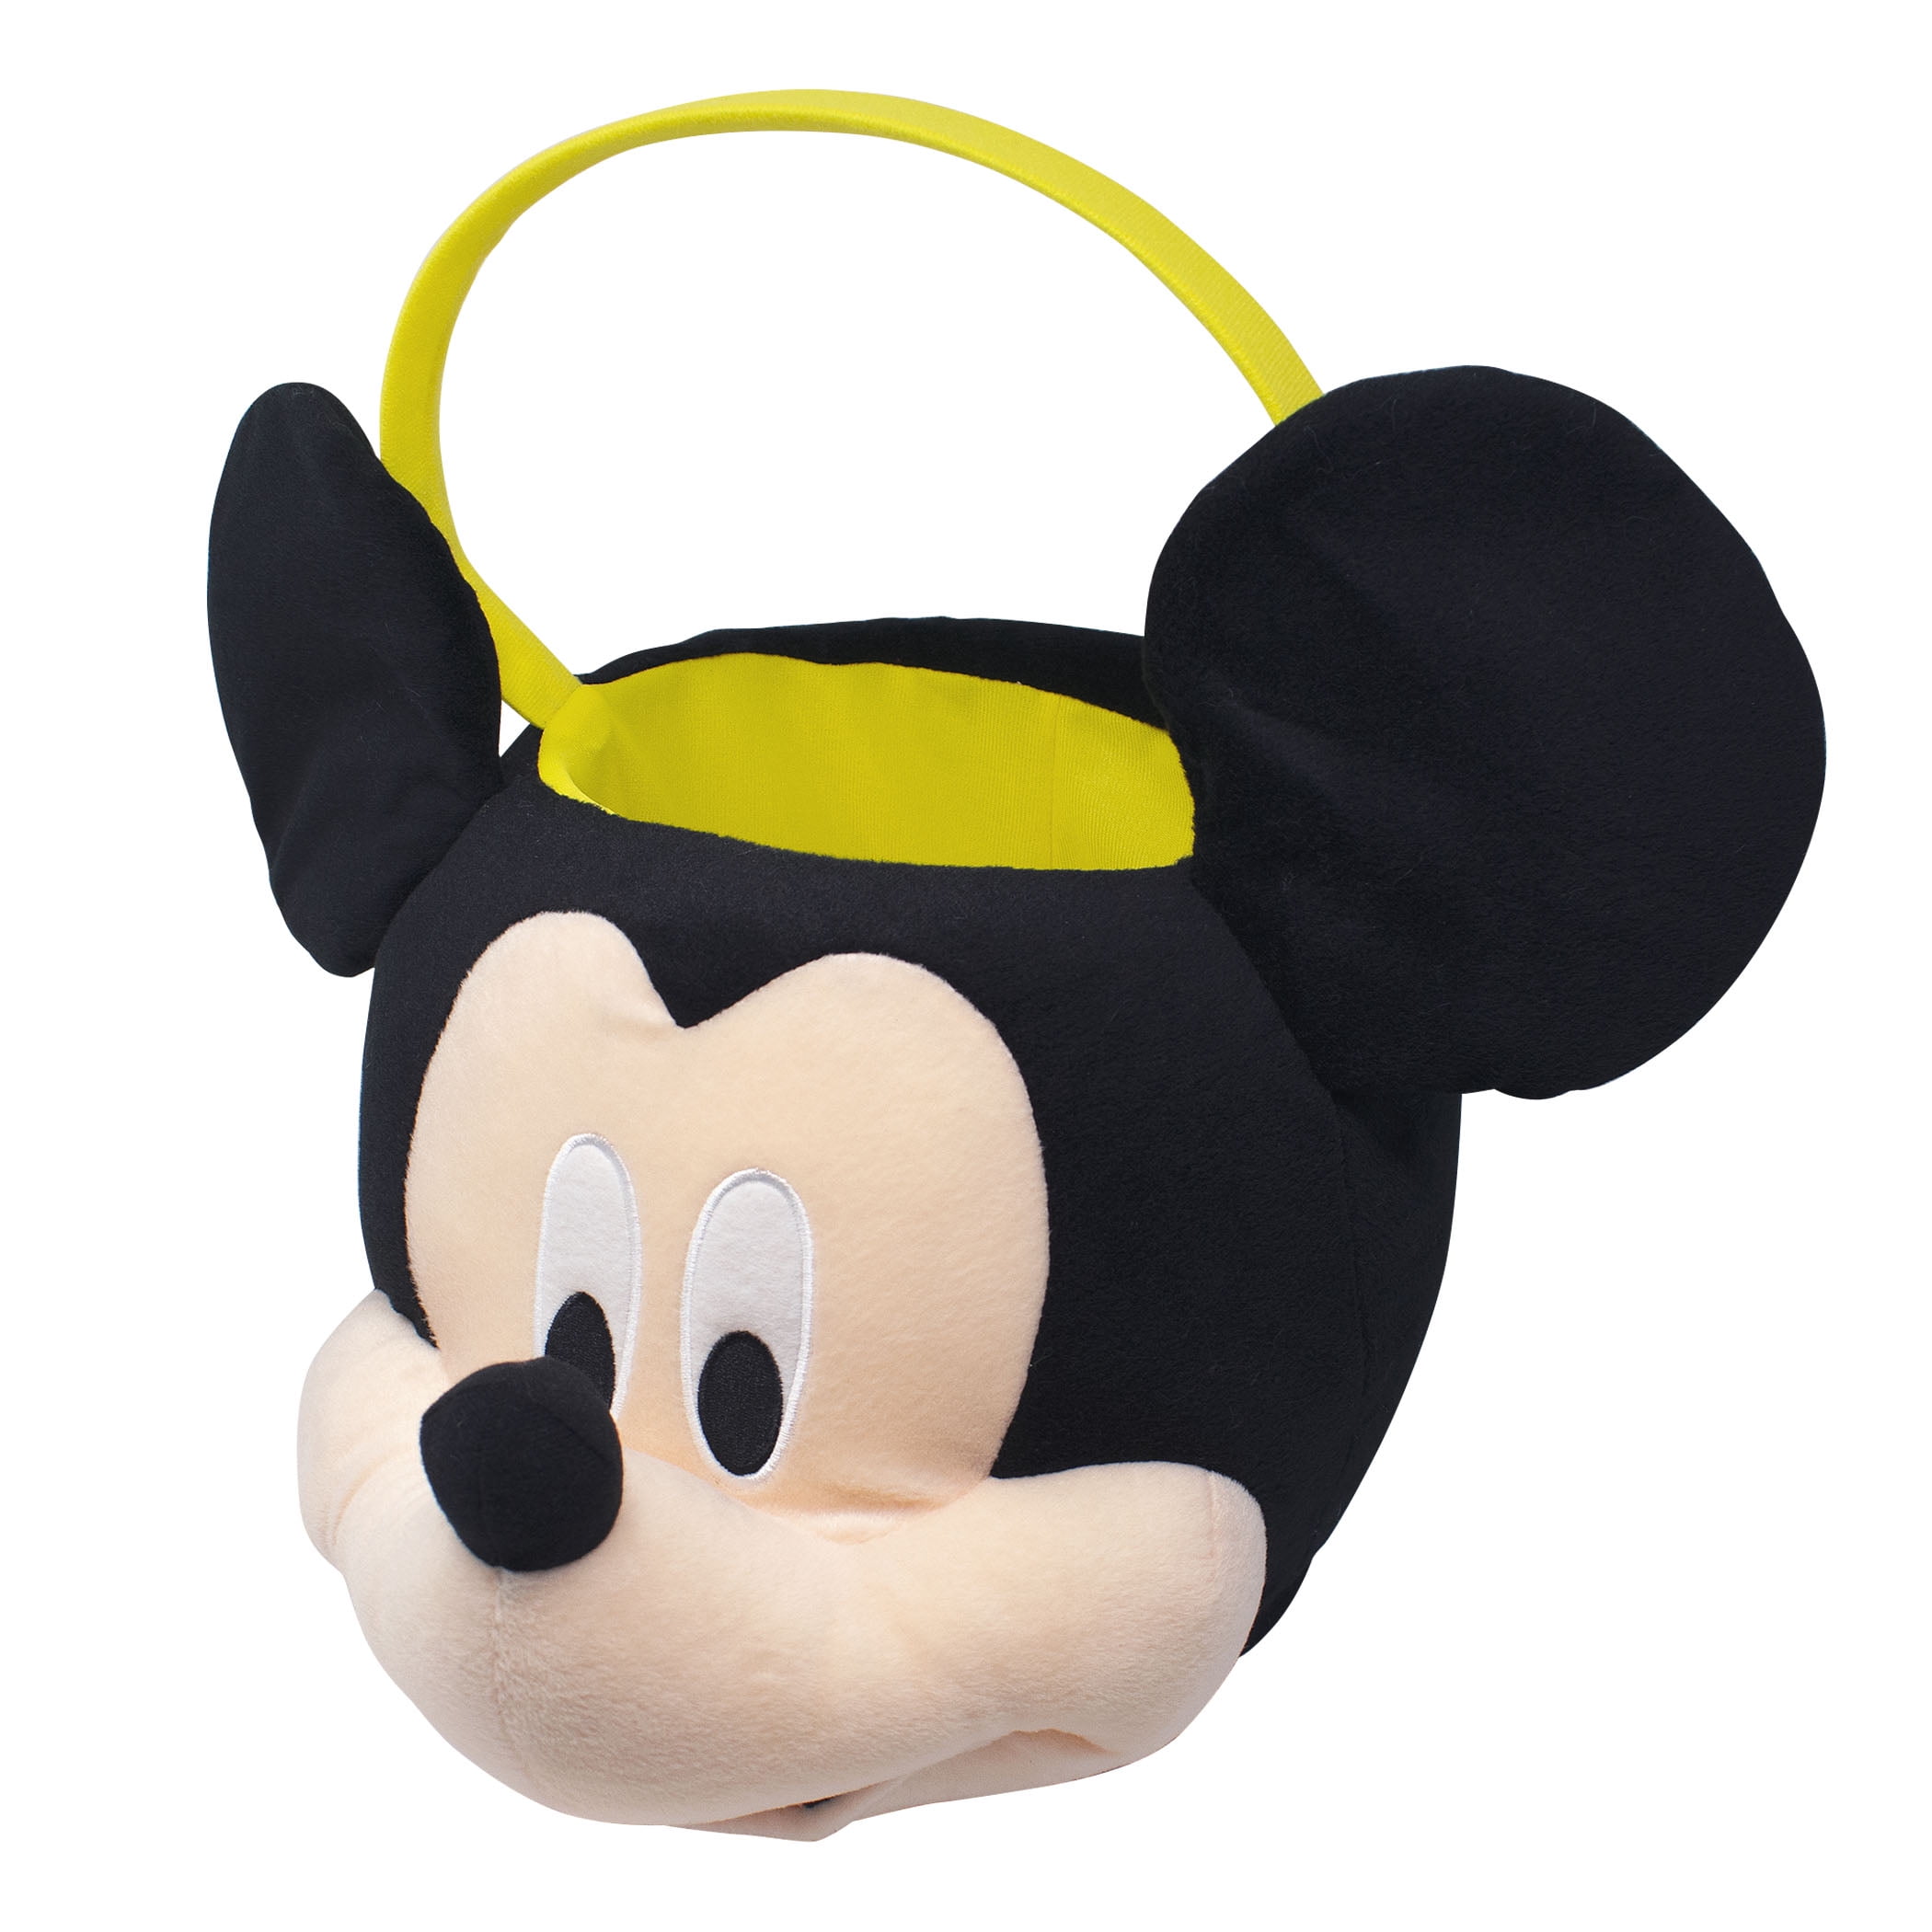 NEW Disney MICKEY MOUSE Toy Figure BUCKET Gift Storage Beach Candy Basket Bin 